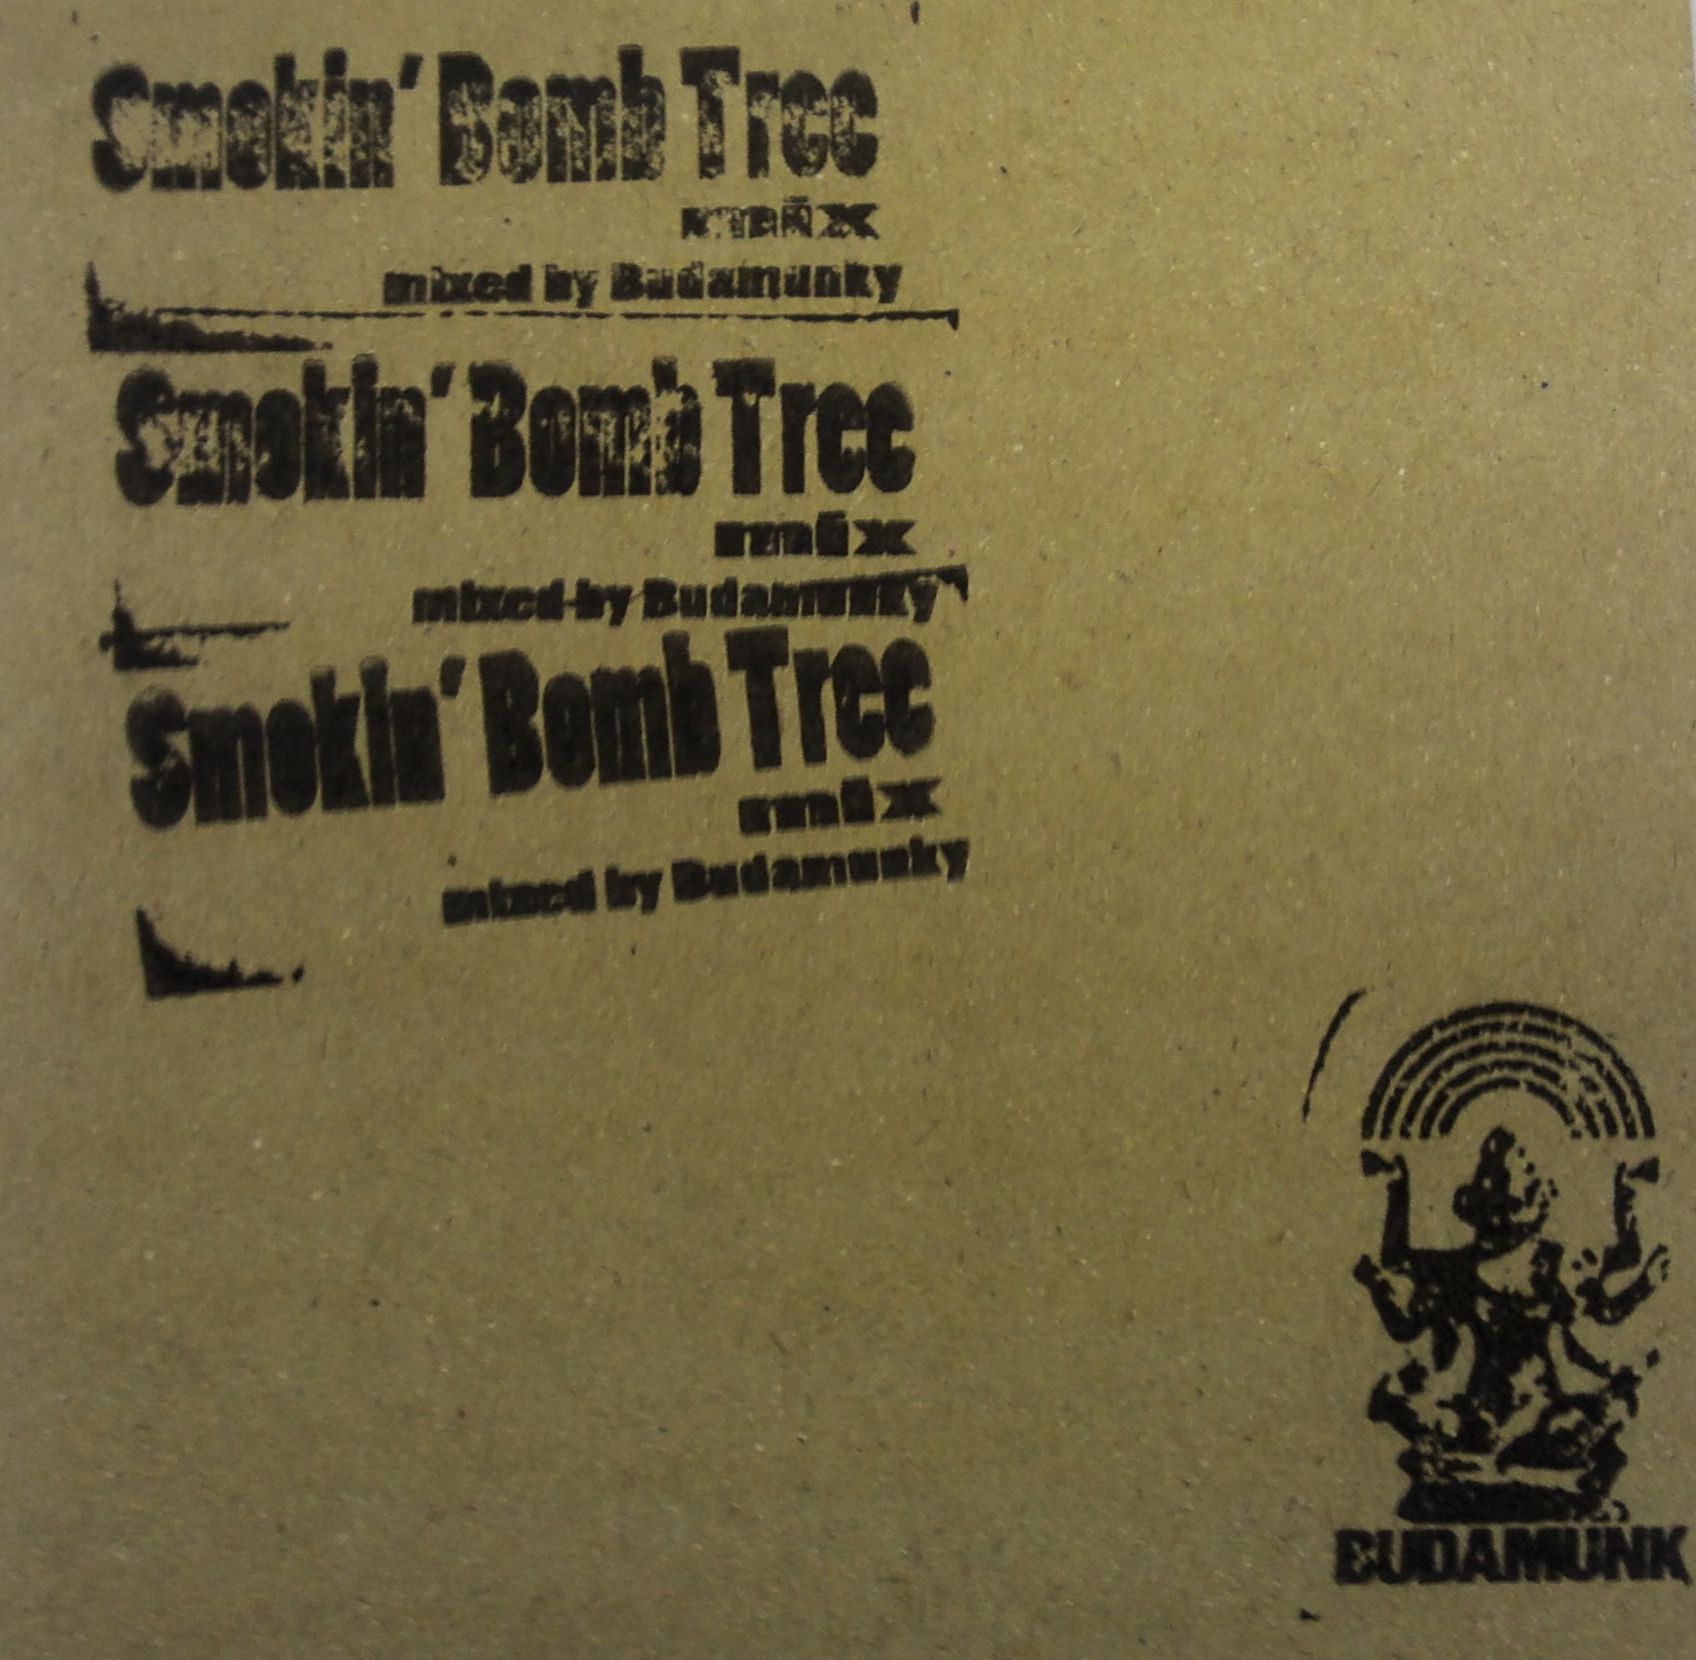 BUDAMUNK / ブダモンク / SMOKIN` BOMB TREE